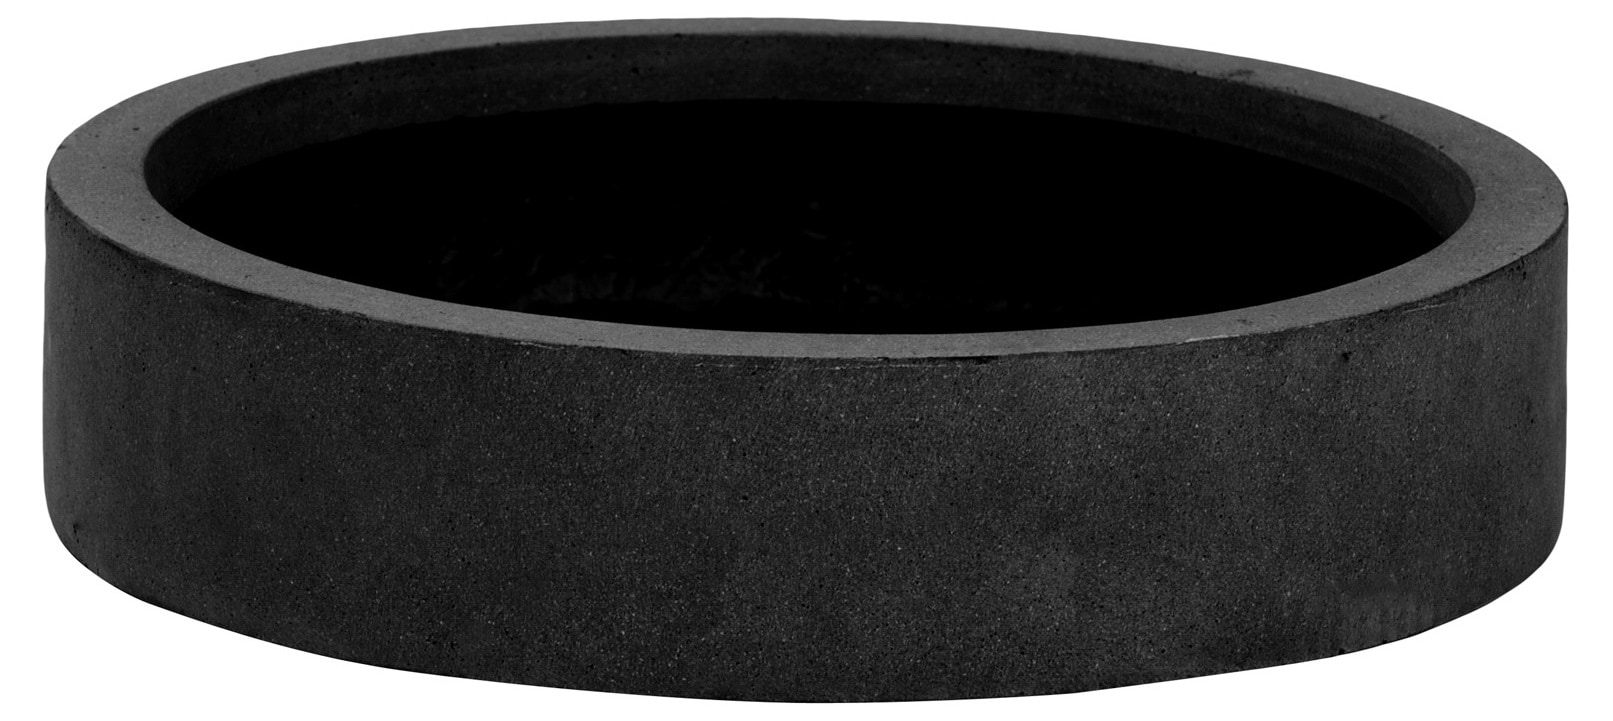 Pottery Pots E1368-S1-01 Max Low Small Fiberstone Indoor Outdoor Modern Round Planter Black 